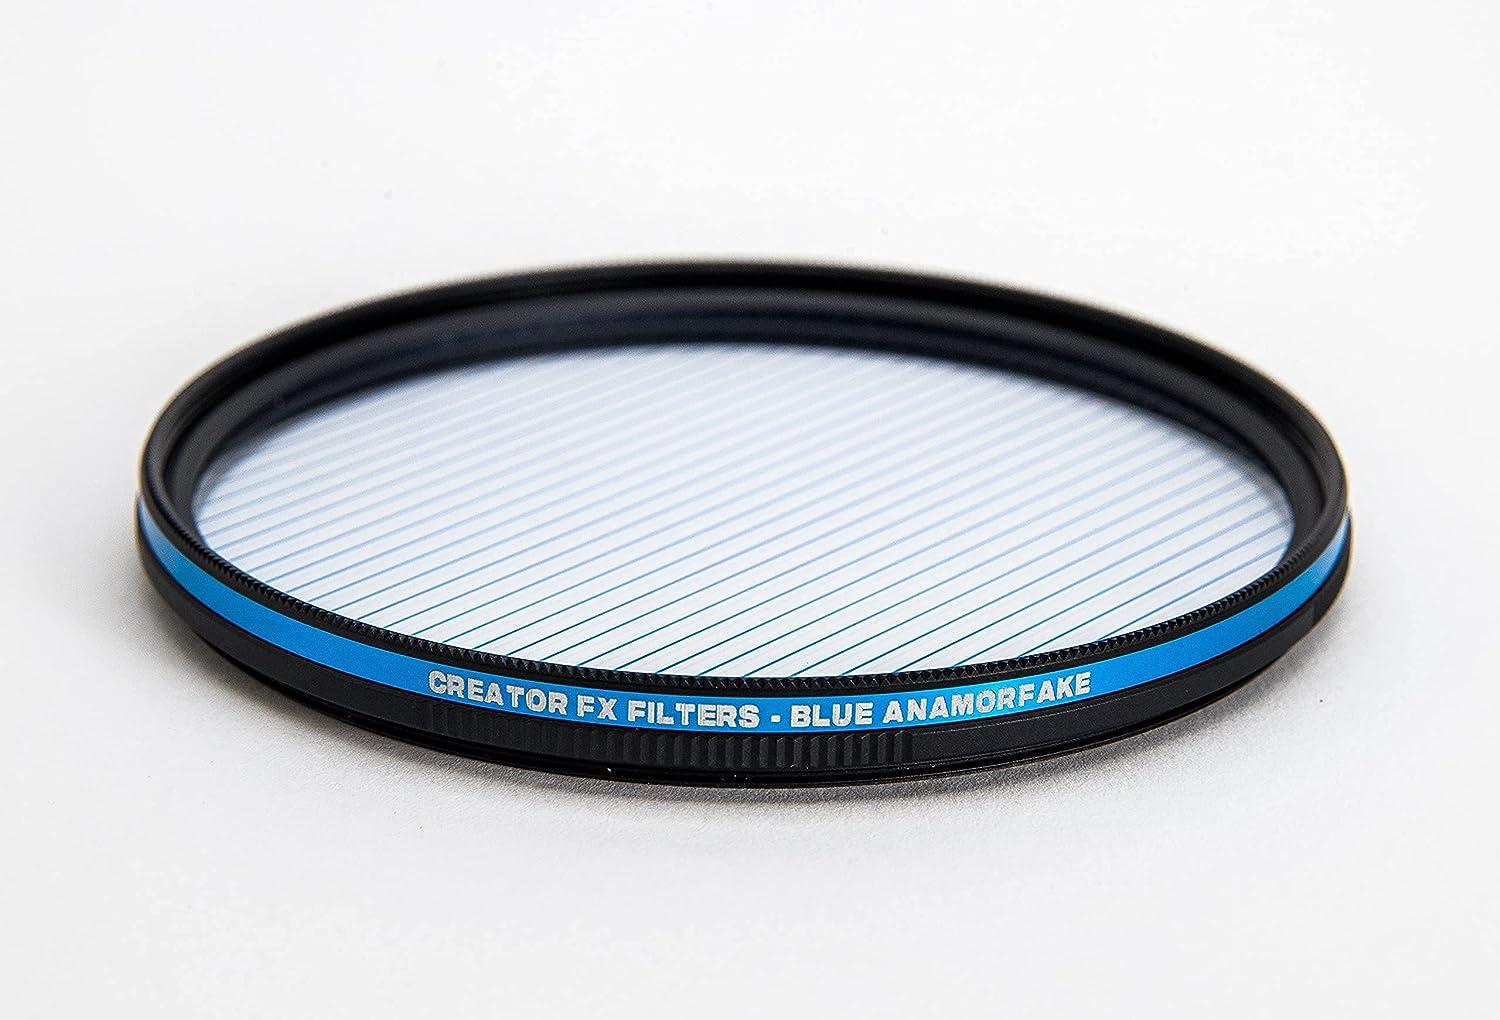 Creator FX Anamorfake Blue Streak Special Effects Lens Filter